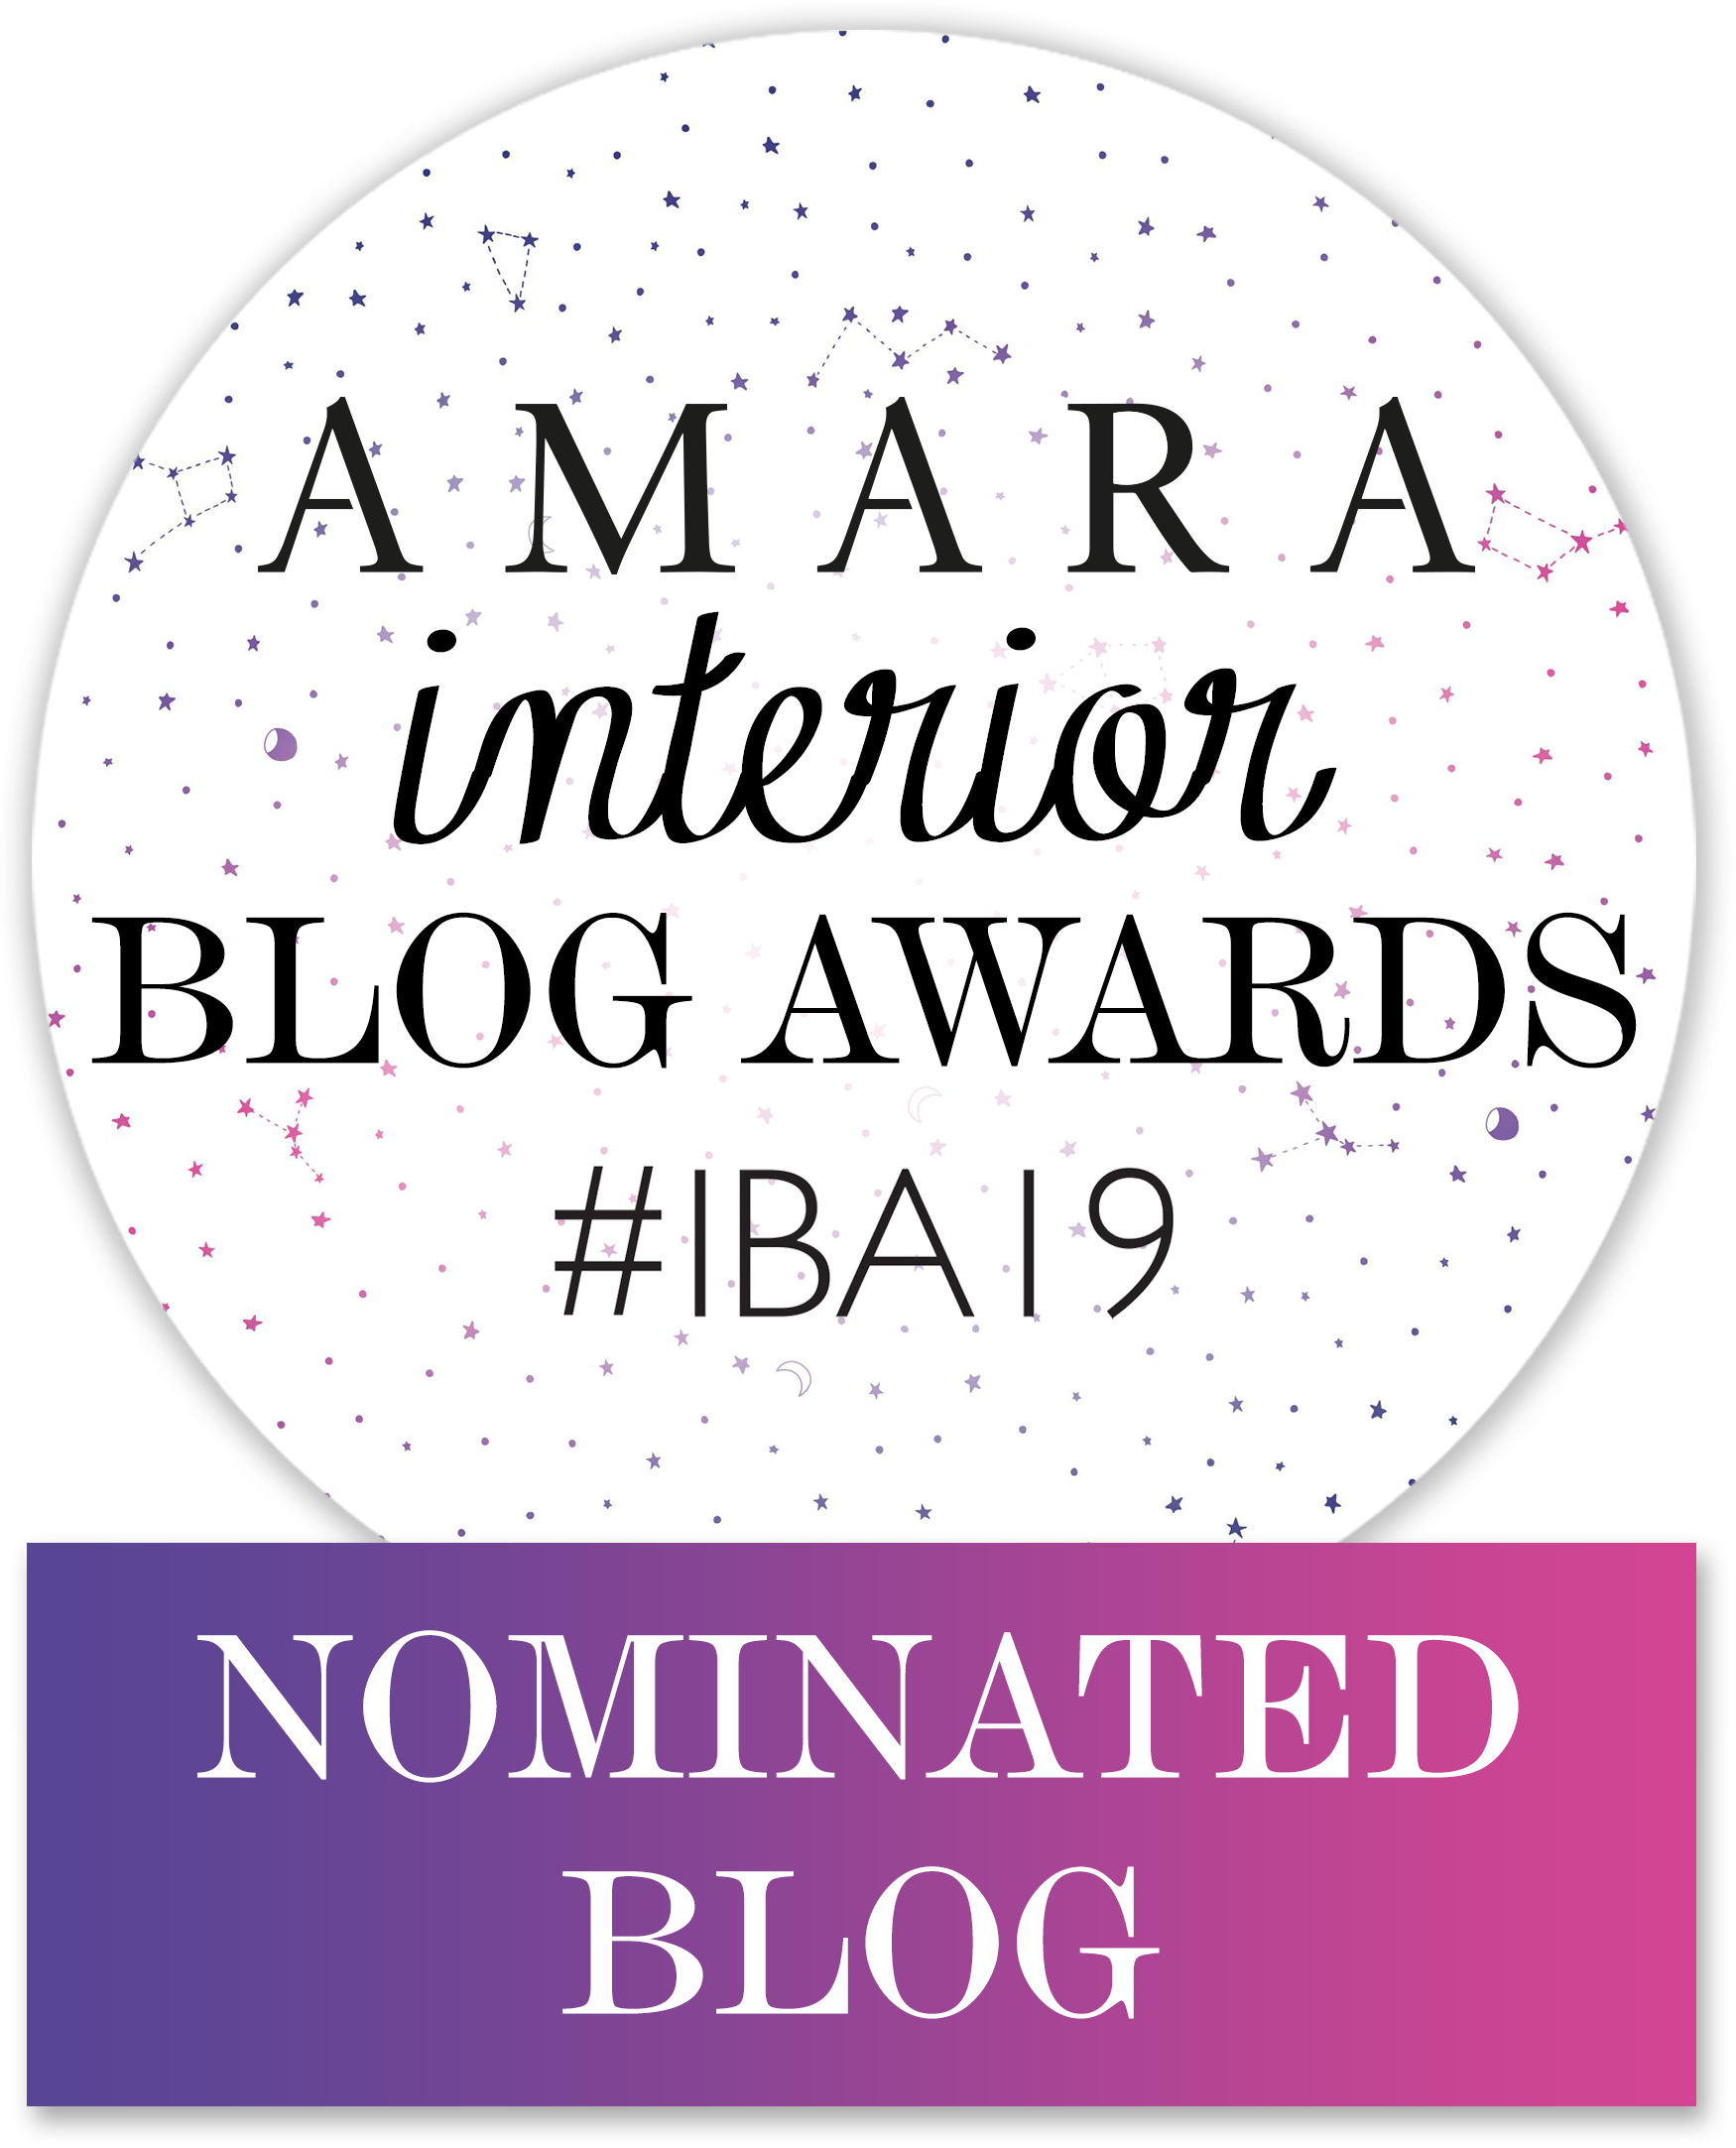 a nominations badge for the amara blog awards